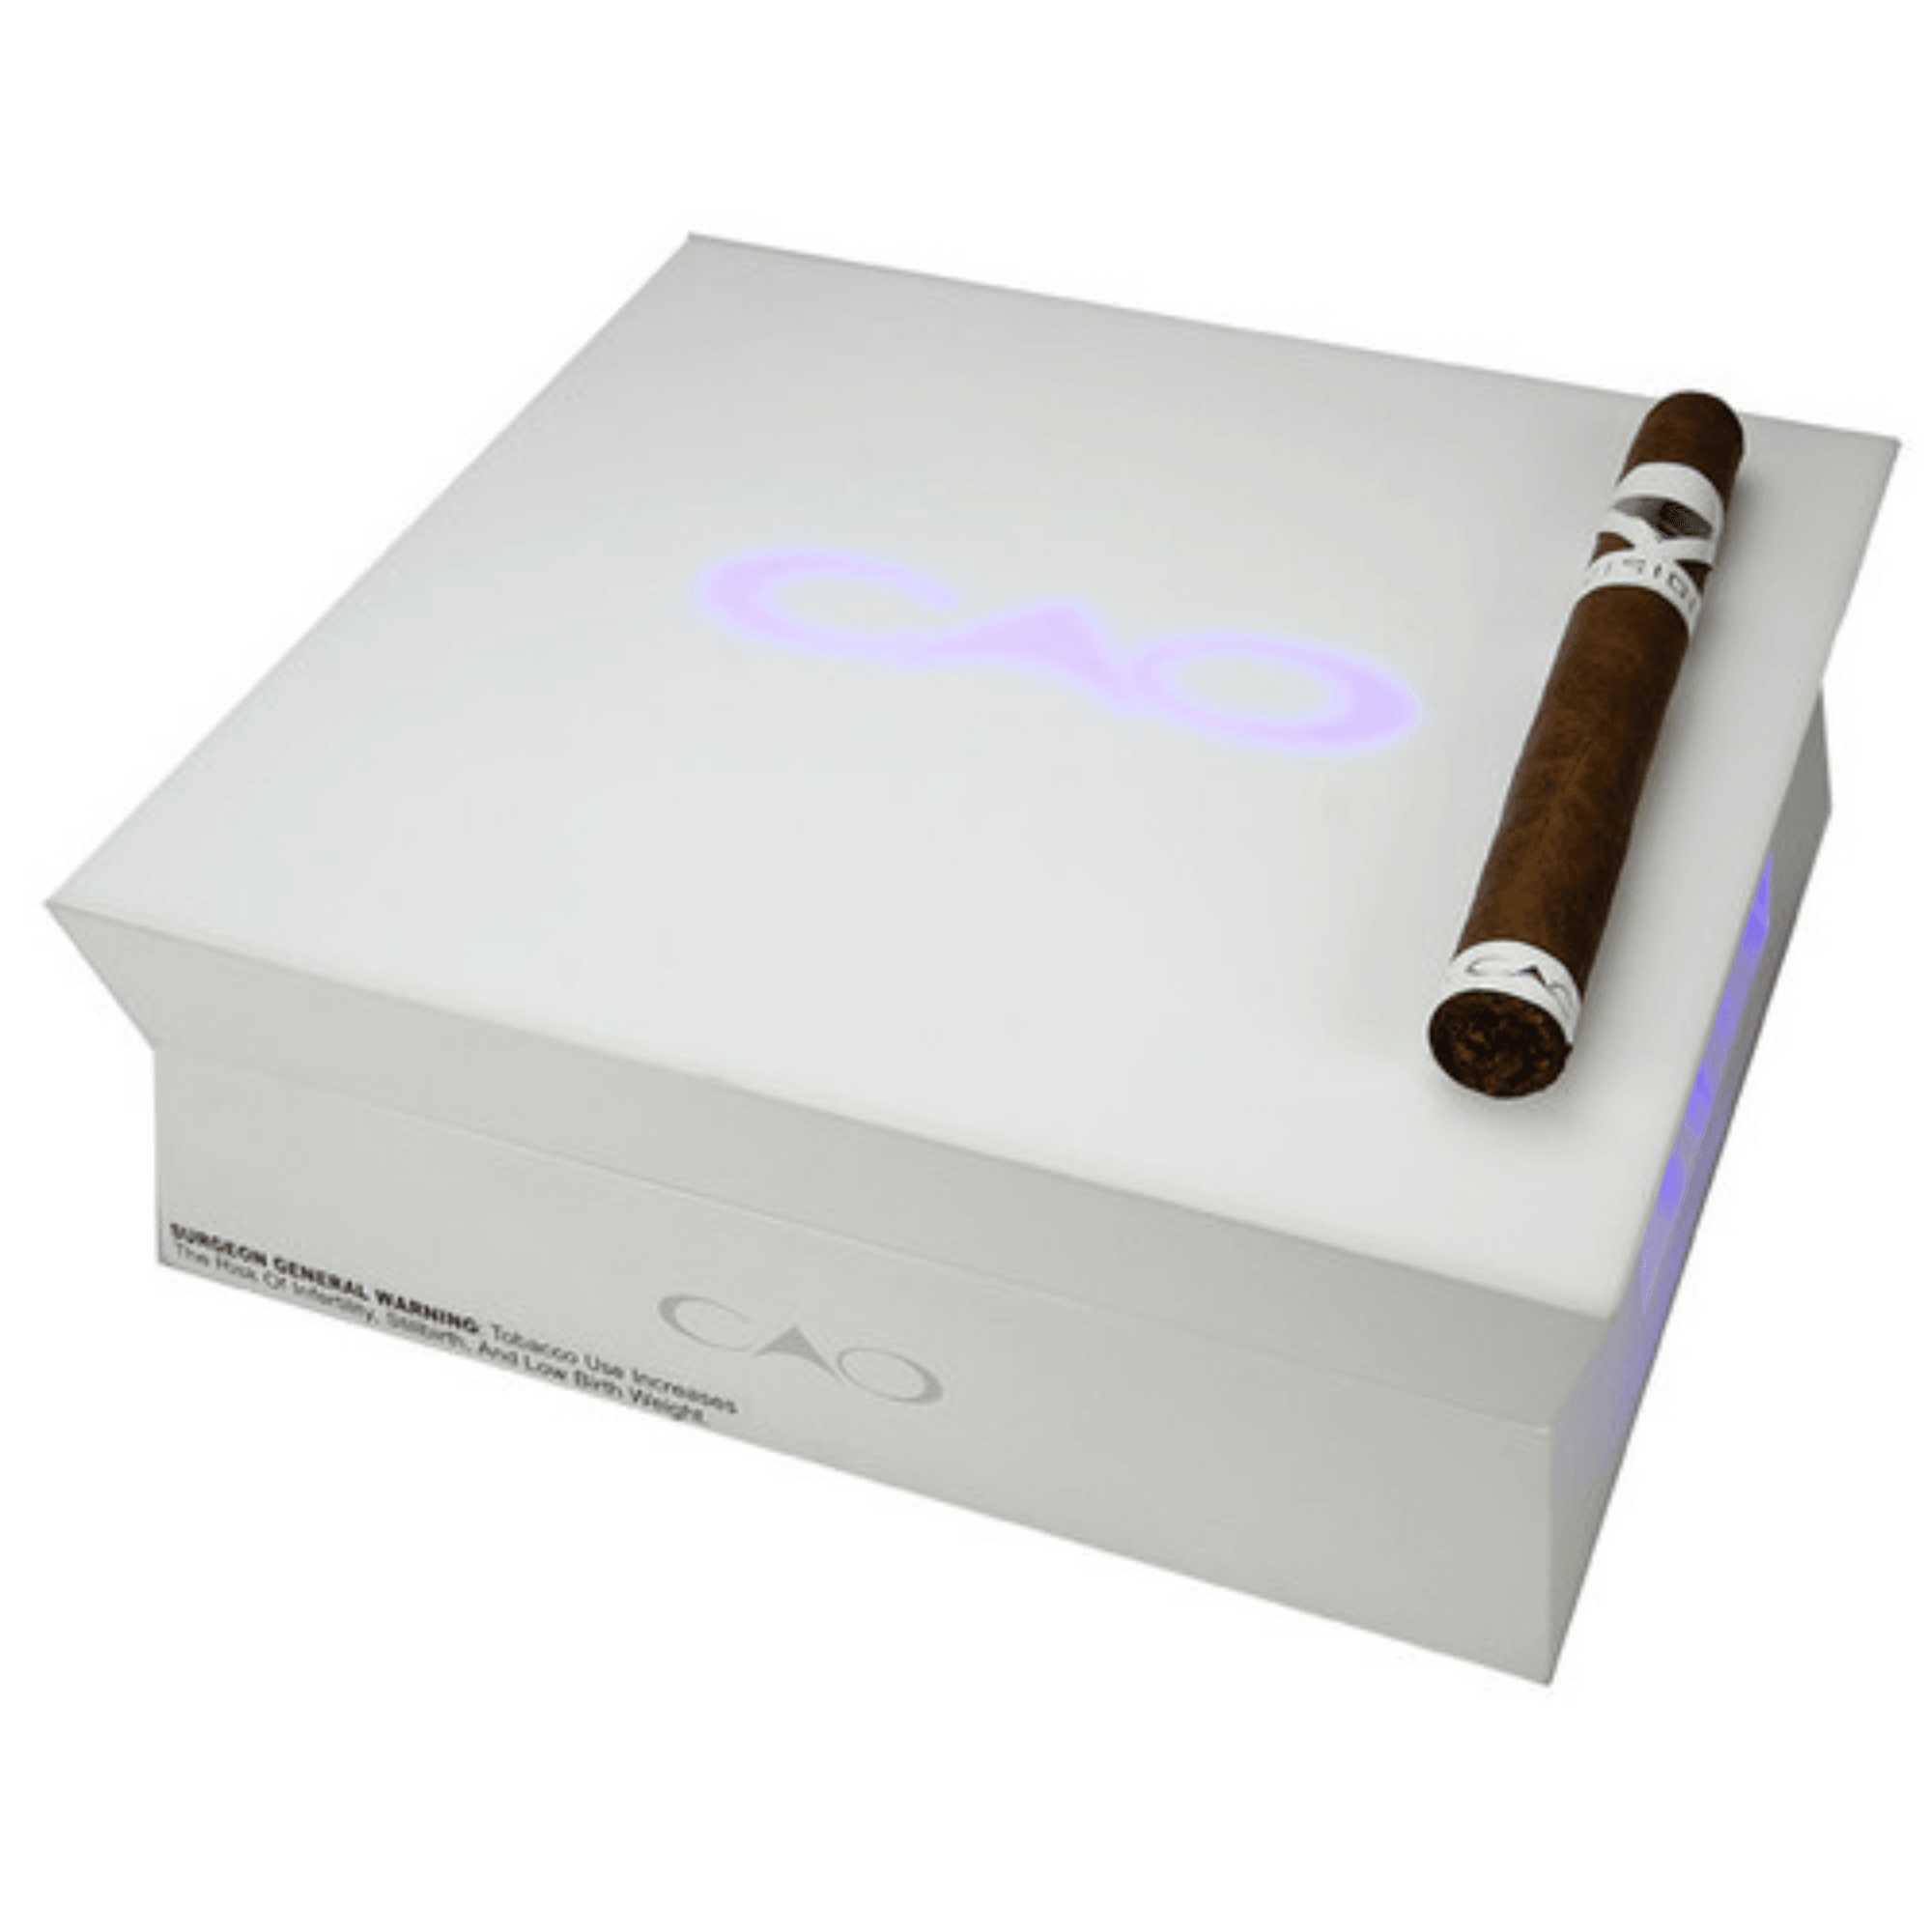 CAO Cigar | Vision Churchill | Box 20 - hk.cohcigars